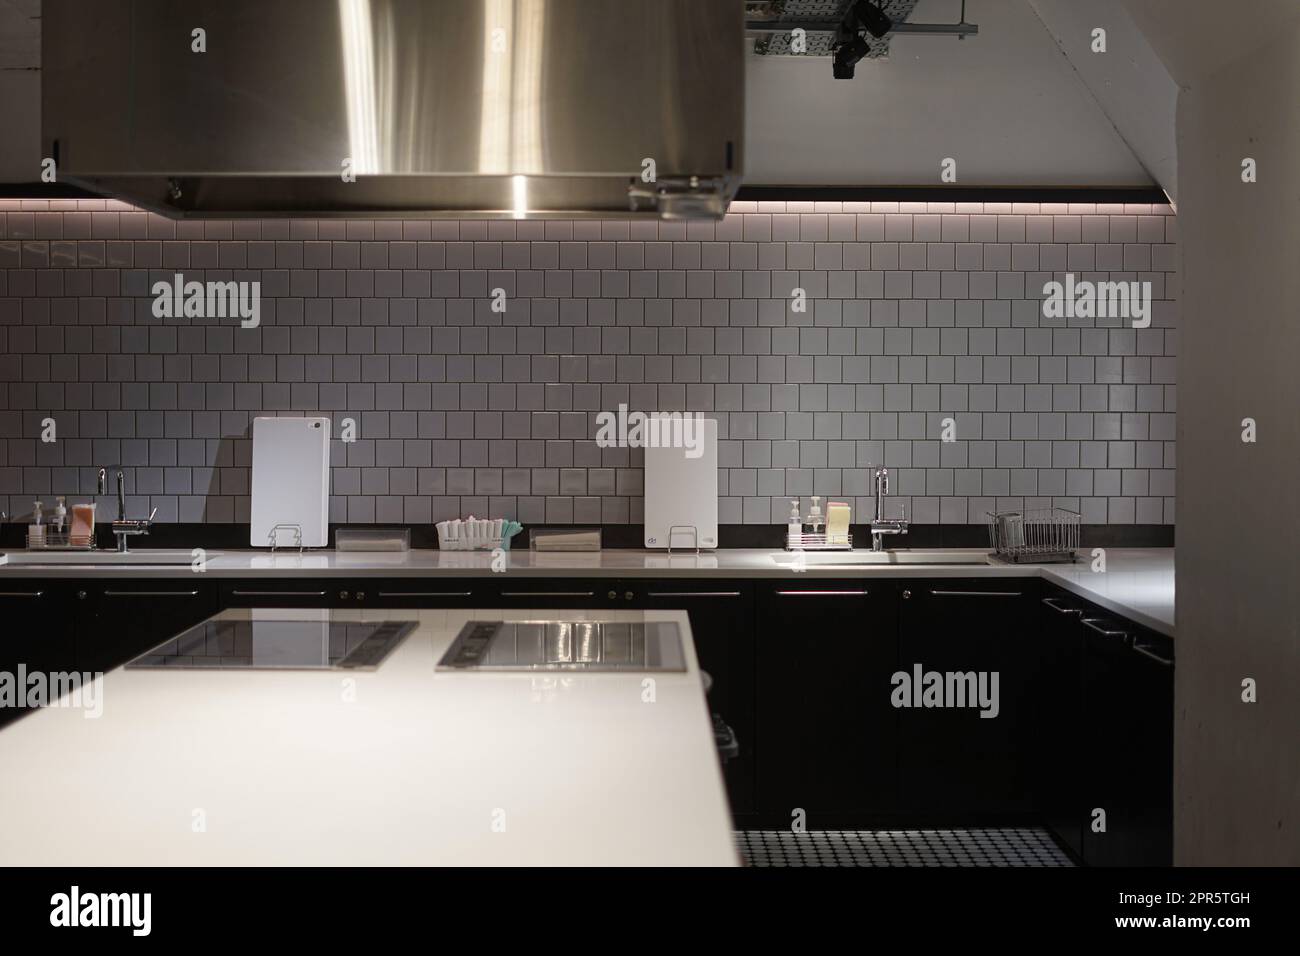 Image of a stylish kitchen Stock Photo